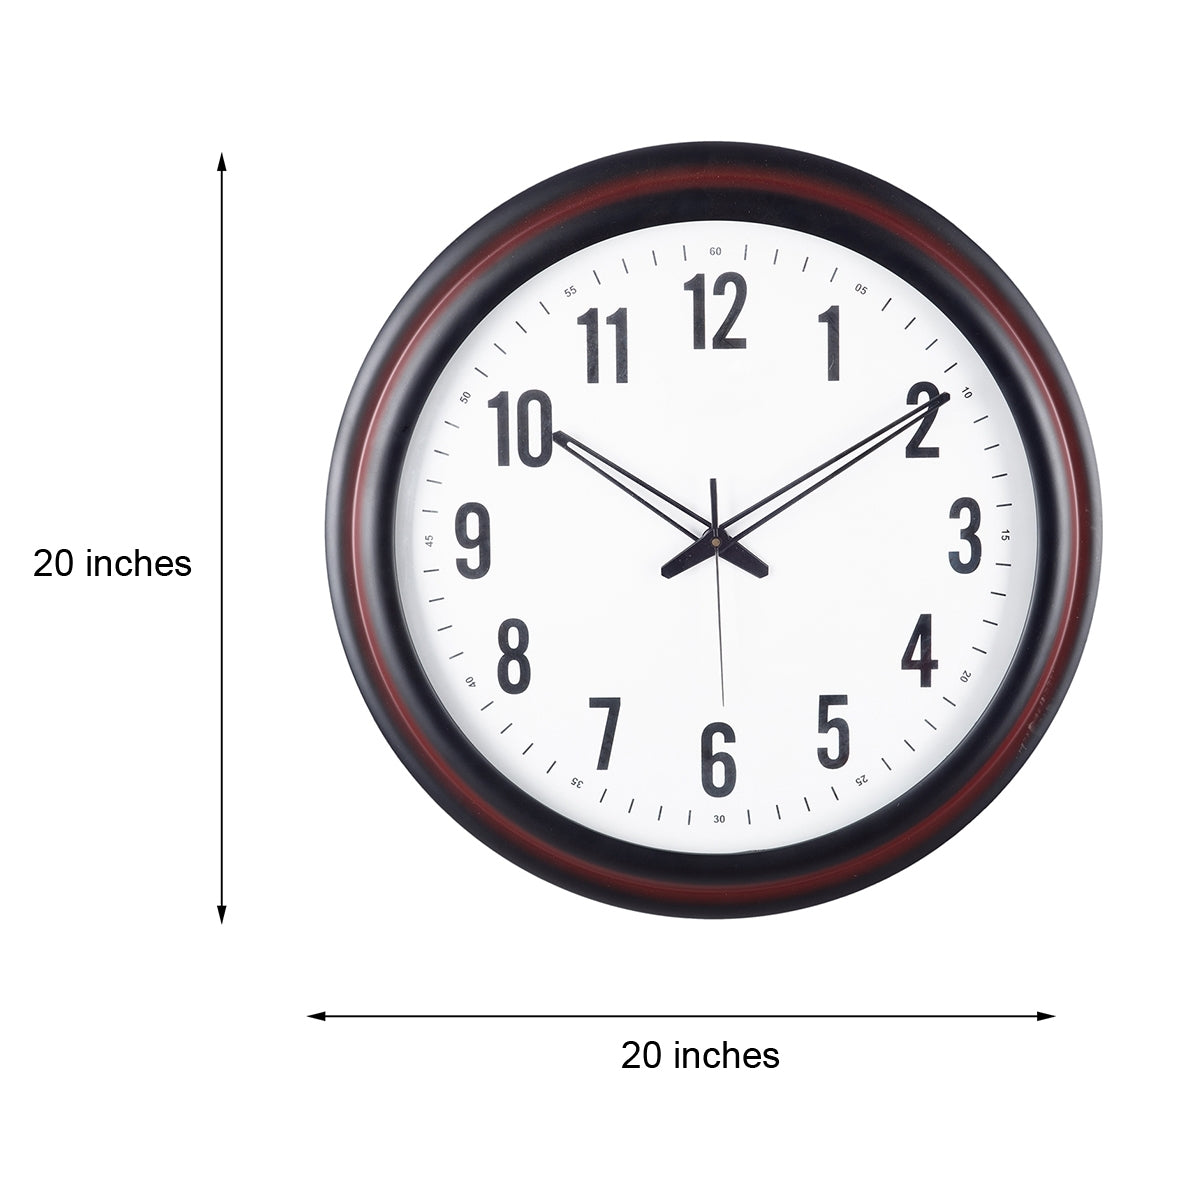 Premium Decorative Analog Brown Round Wooden Wall Clock 1